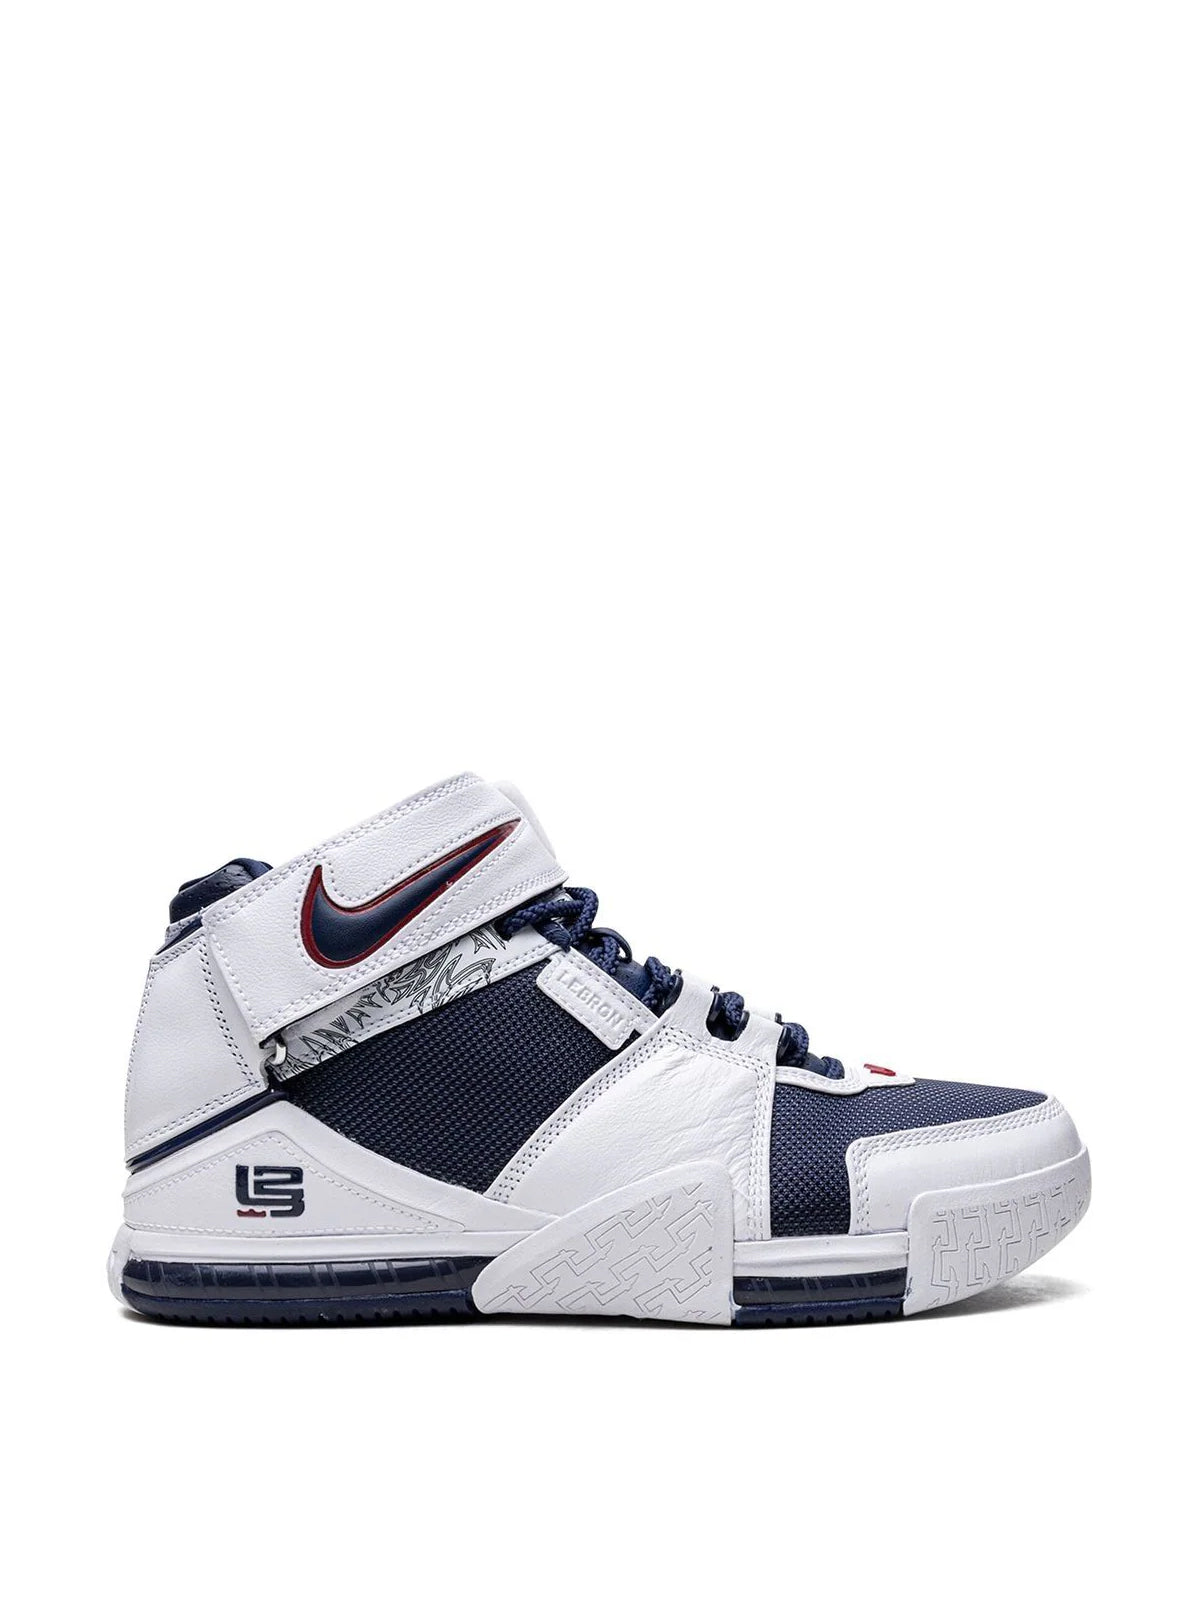 Zoom LeBron II Midnight Navy Sneakers